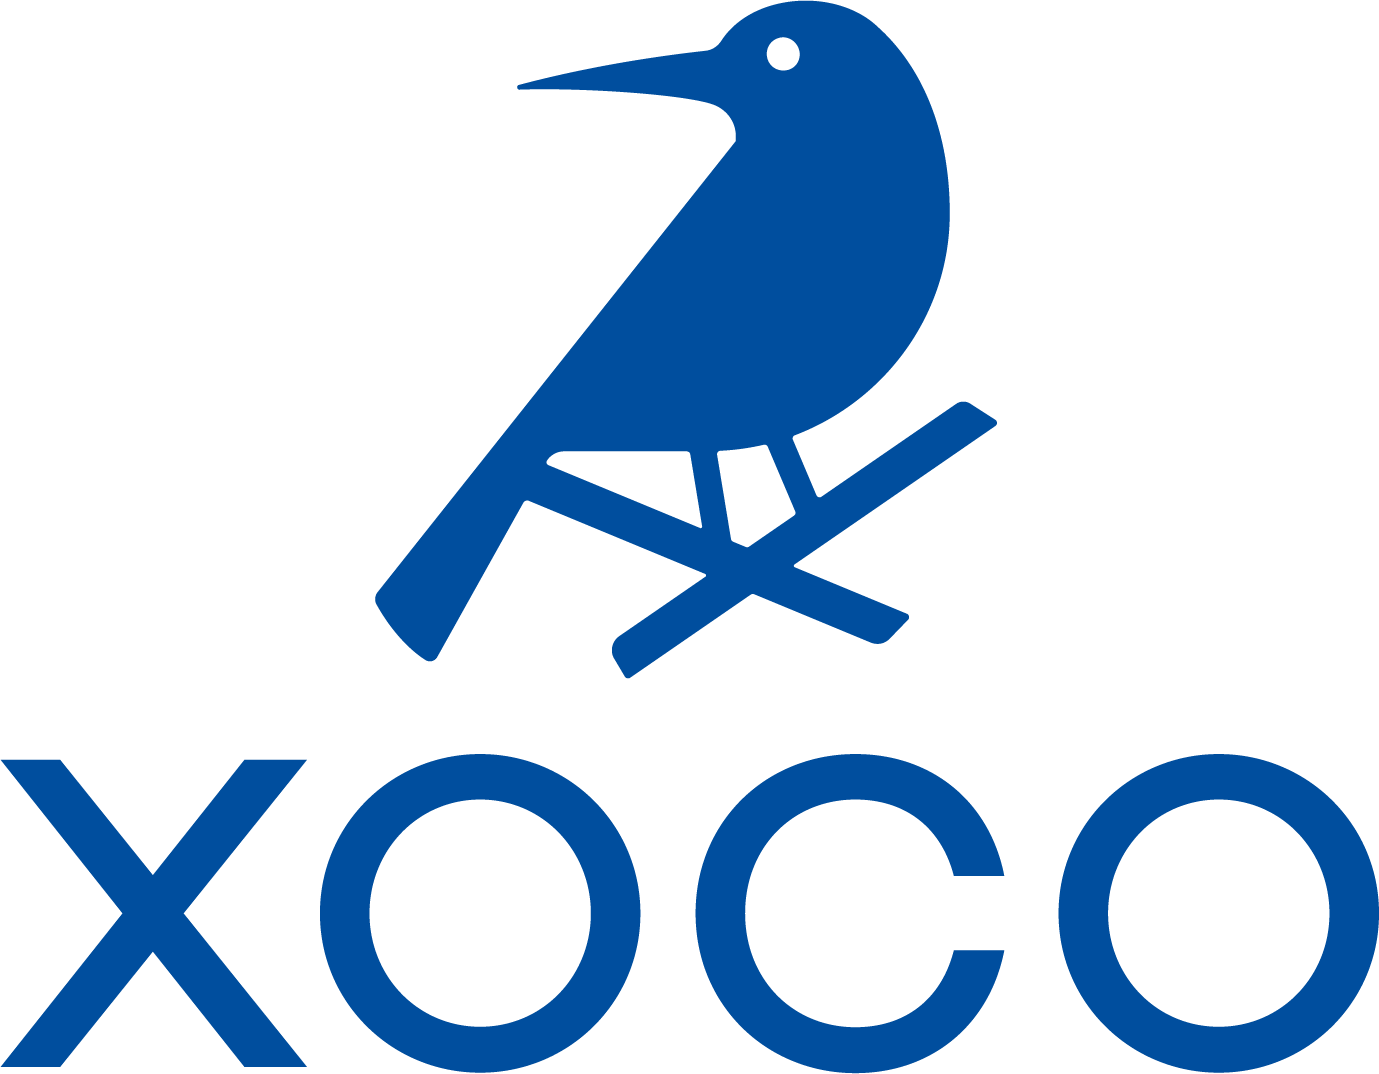 Xoco logo